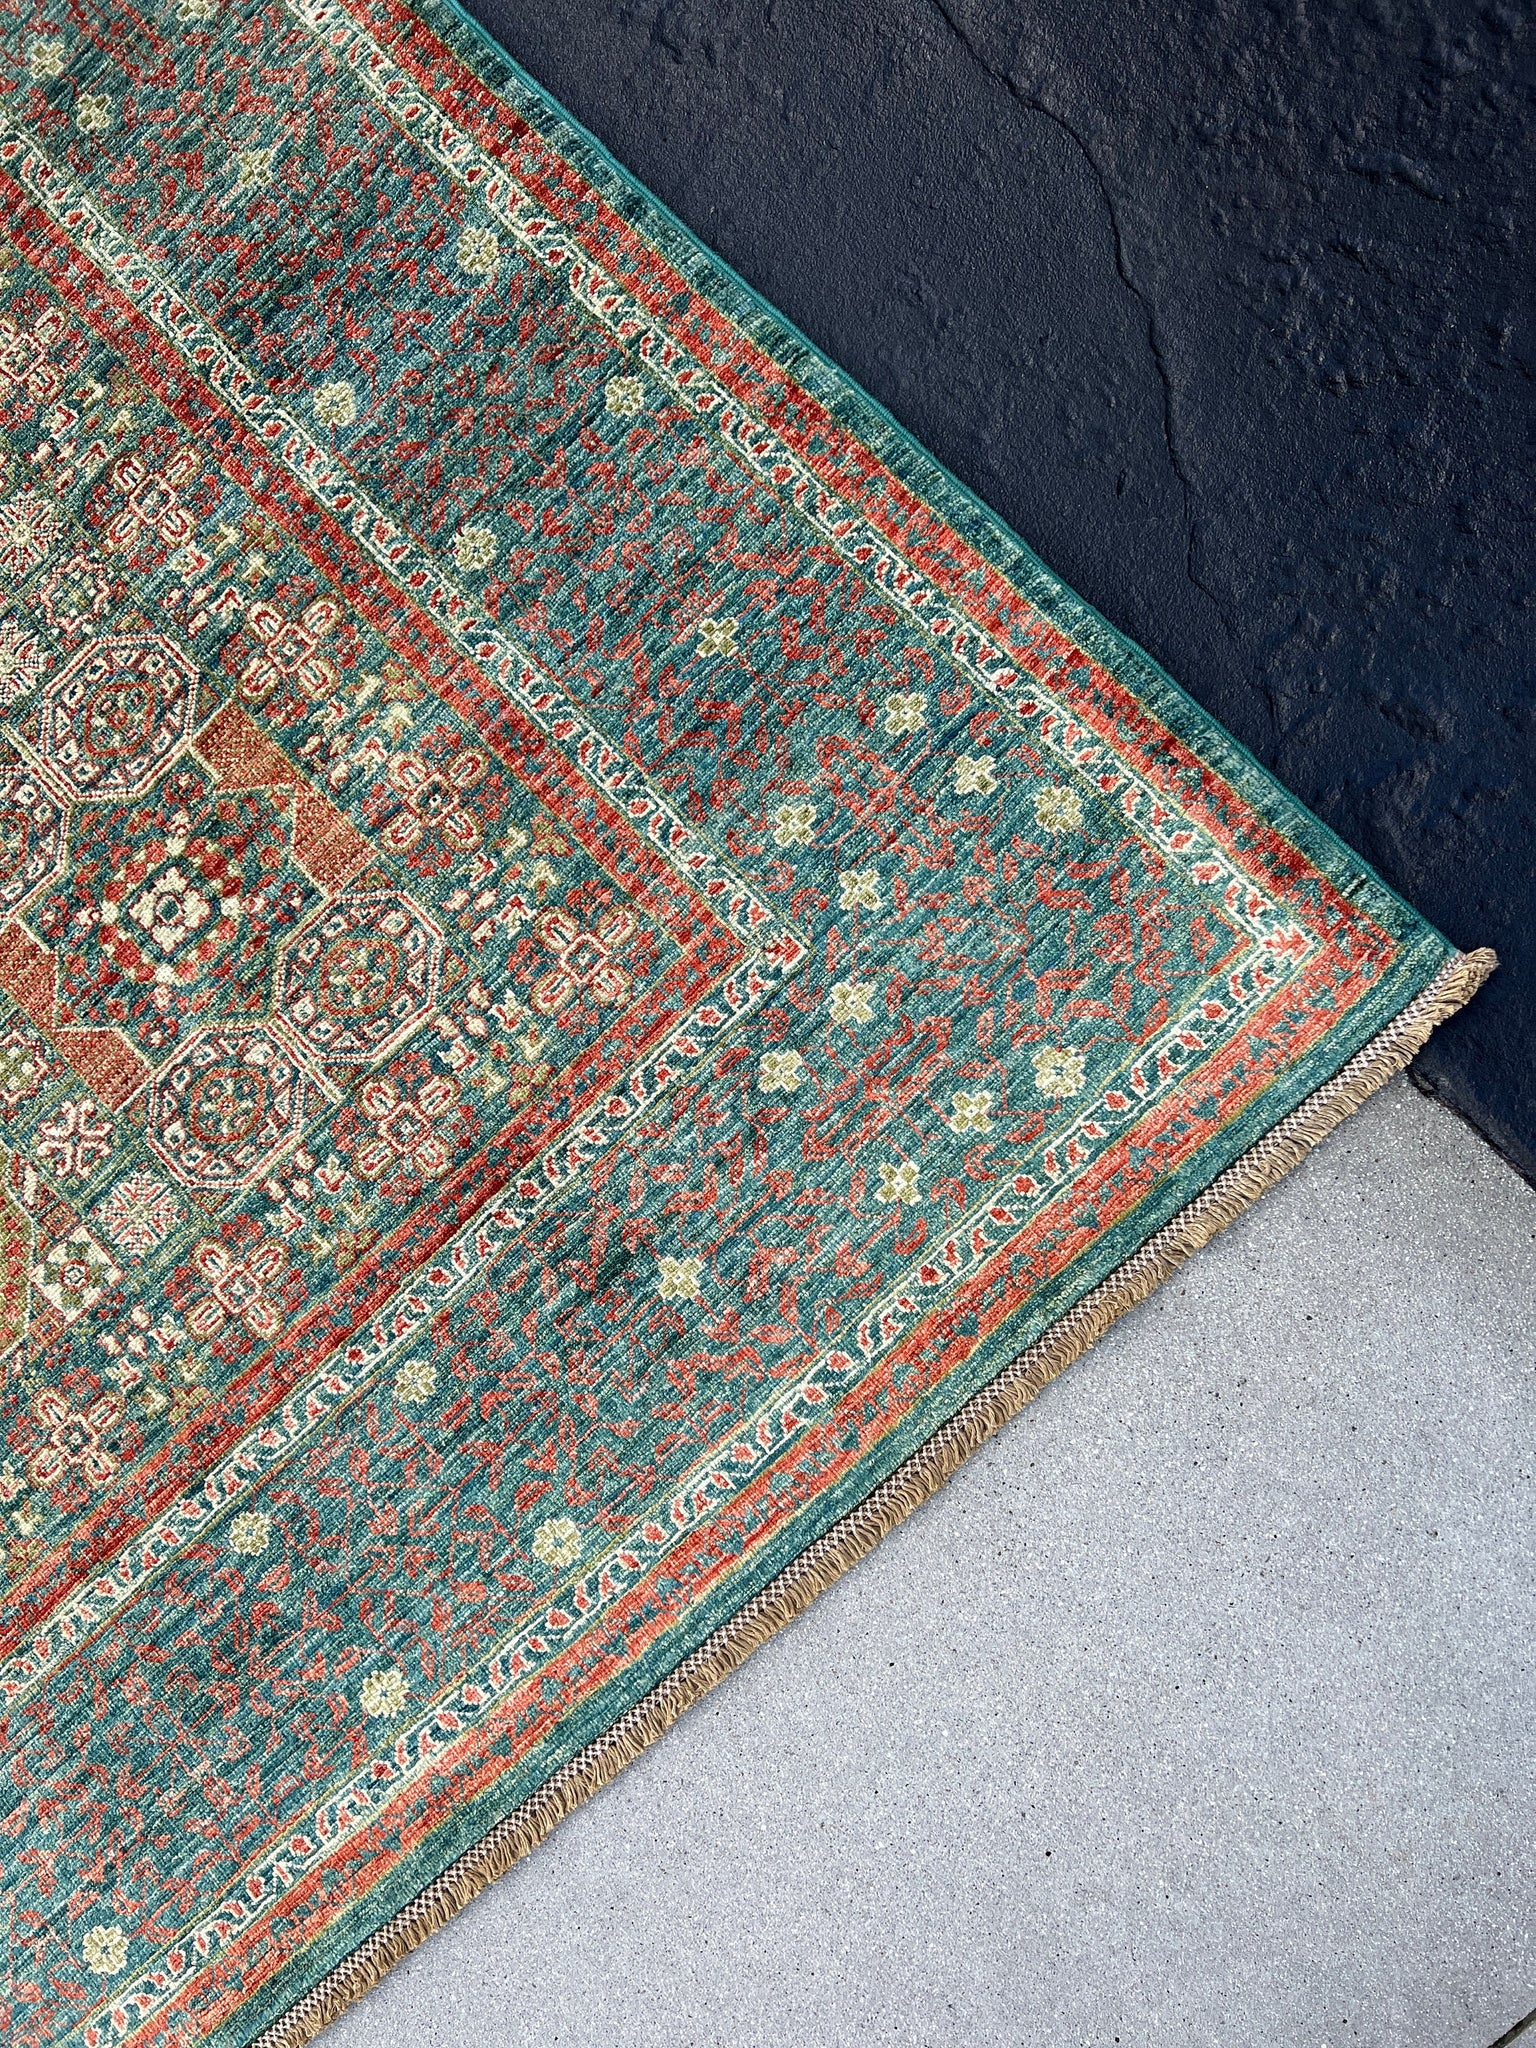 6x8 (180x245) Fair Trade Handmade Afghan Rug | Teal Burnt Orange Moss Green Ivory Denim Blue Tan Chocolate Brown | Mamluk Knotted Oriental